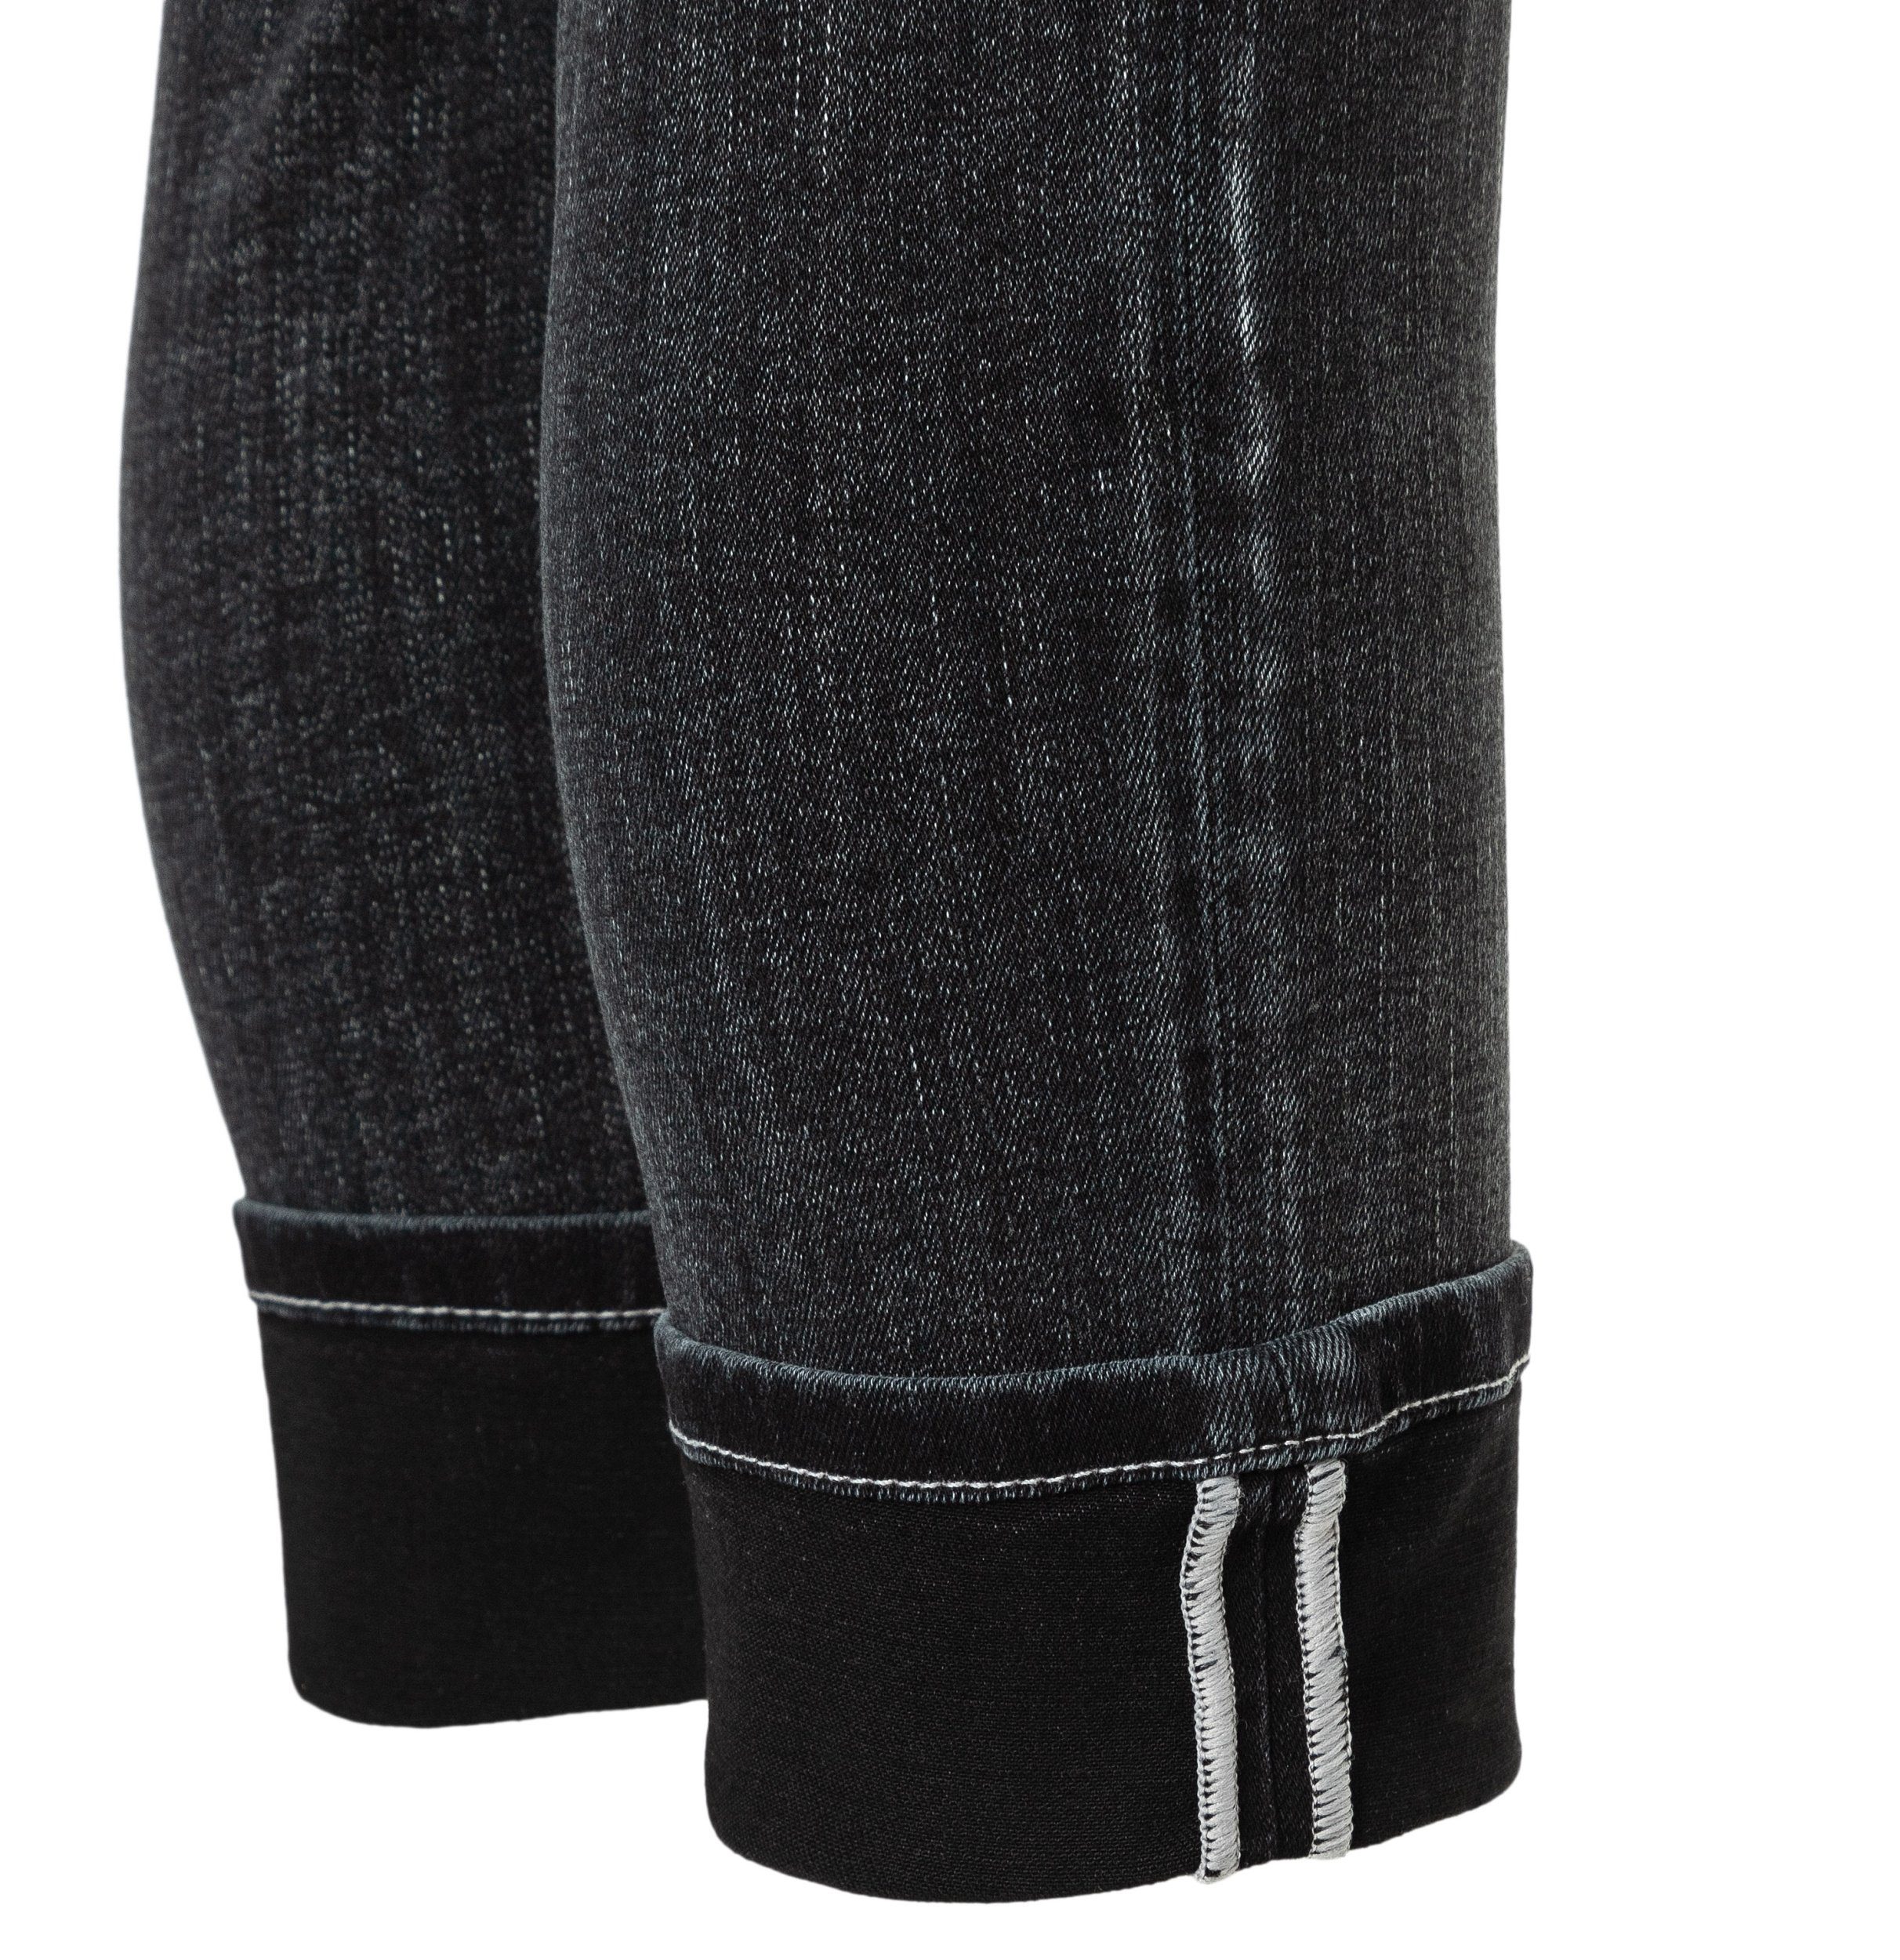 MAC RICH SLIM D962 5-Pocket-Jeans Grau